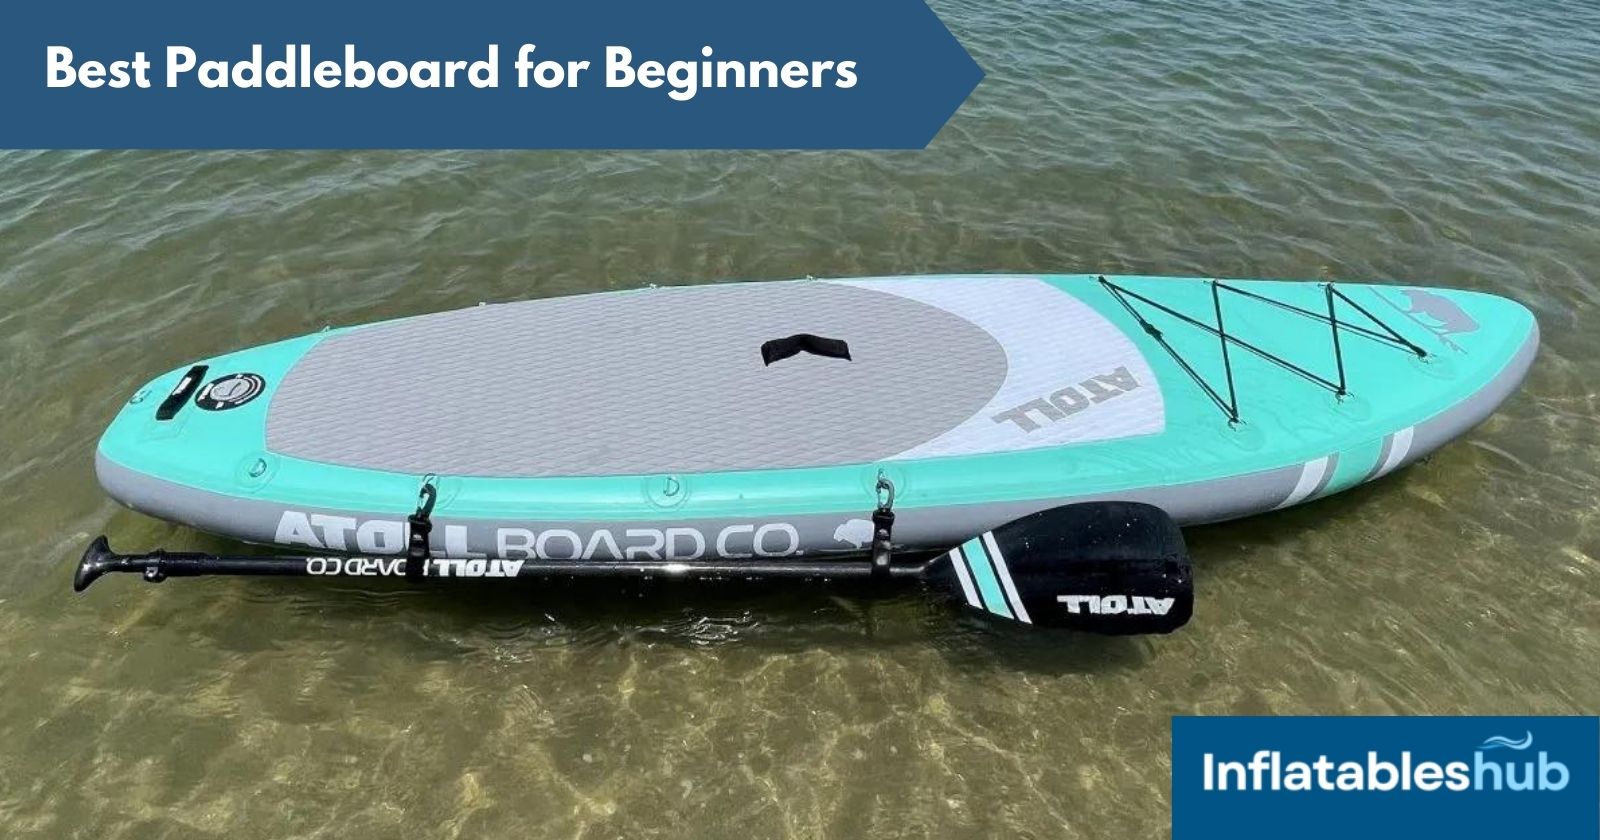 Best Paddleboard for Beginners